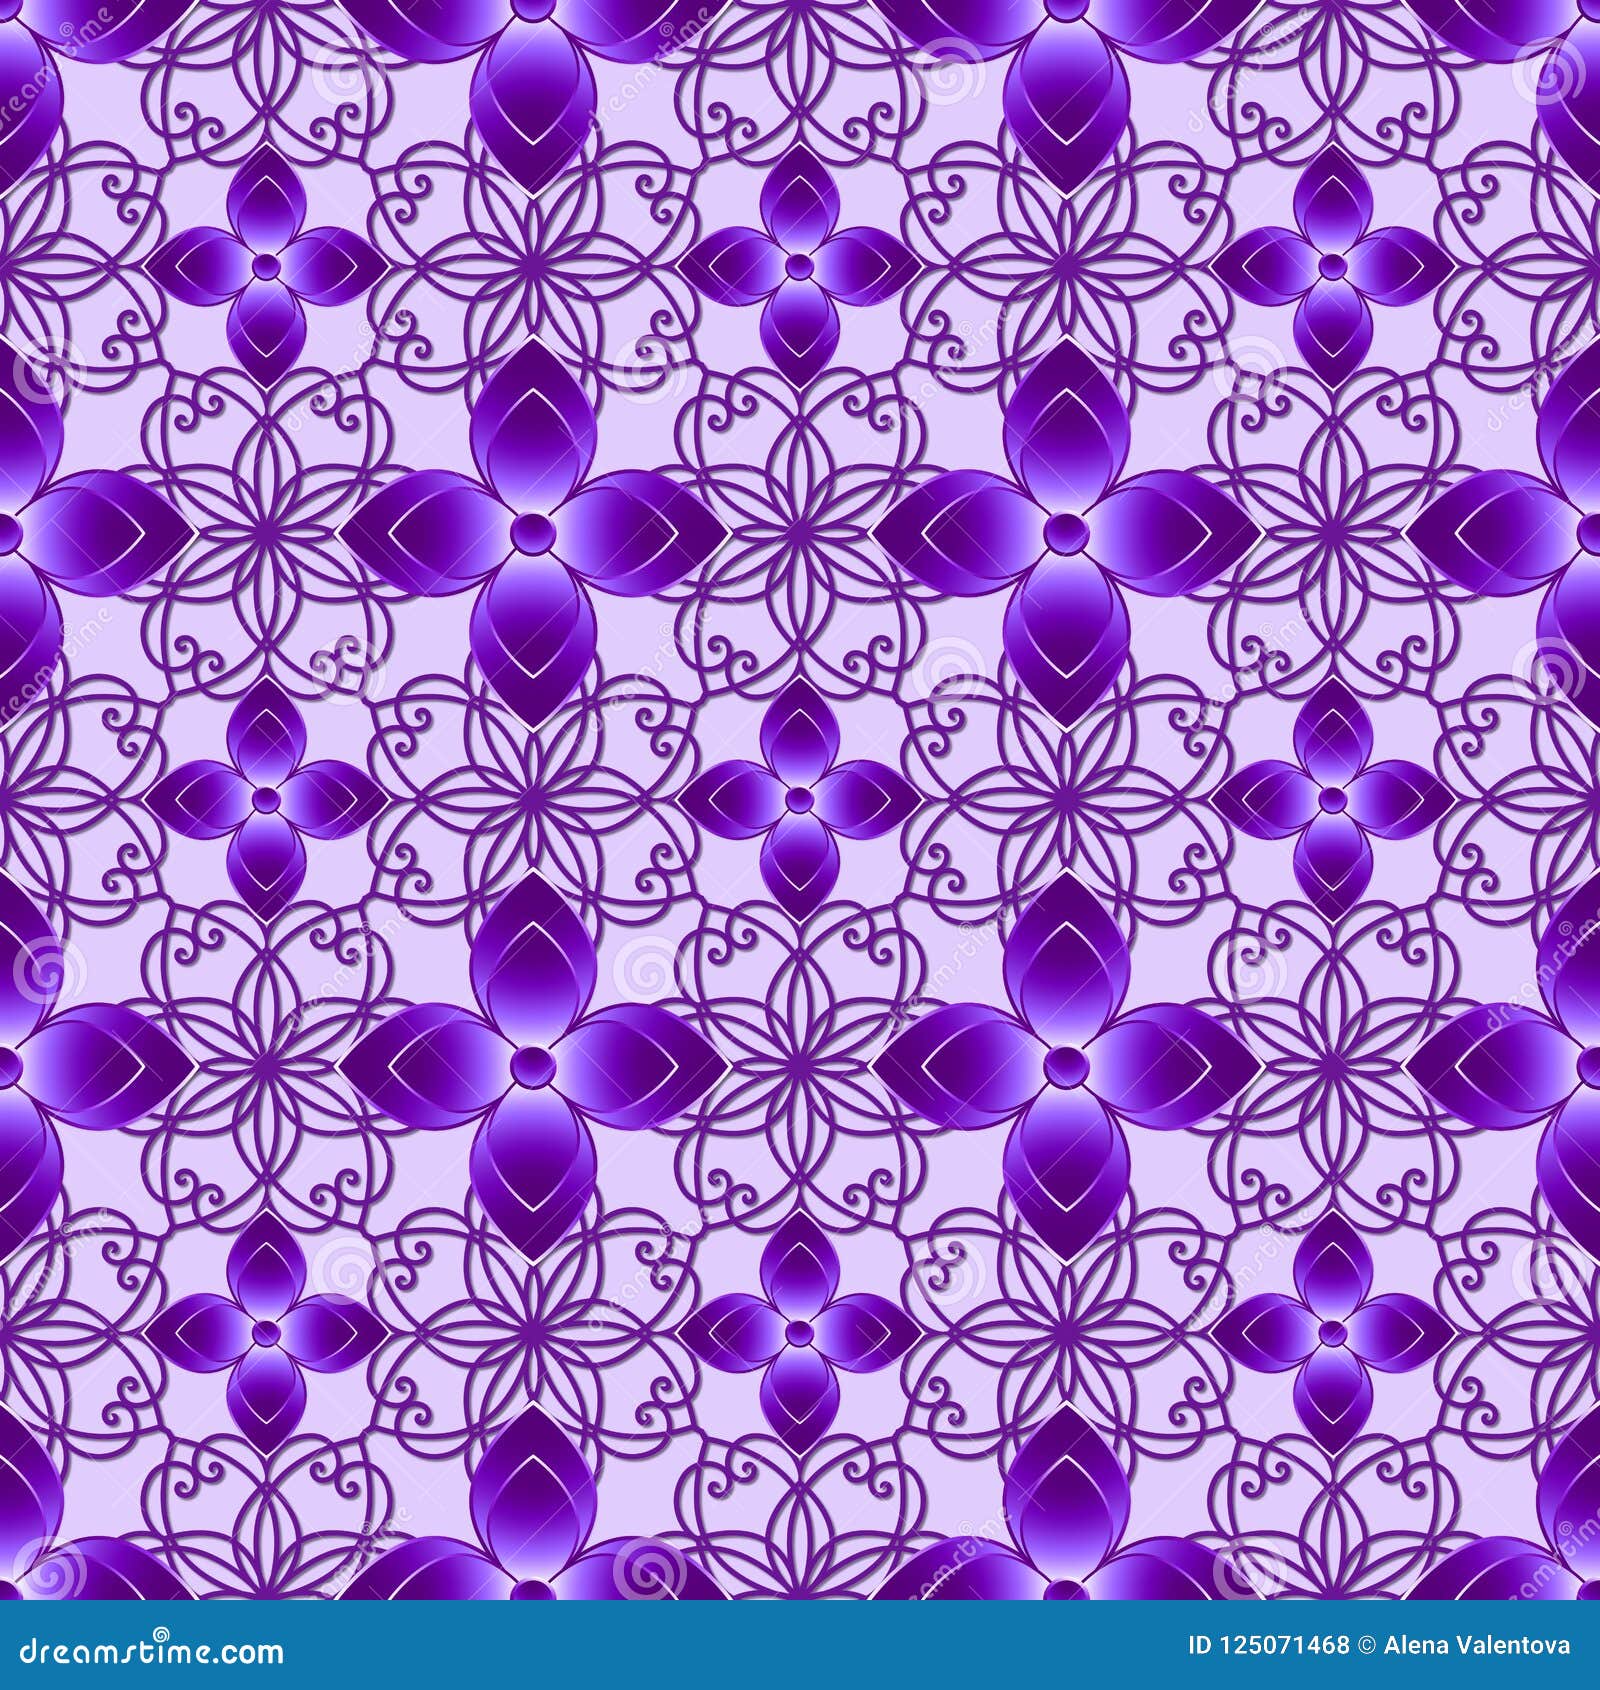 3D Regular Texture with Purple Flowers. Stock Illustration ...